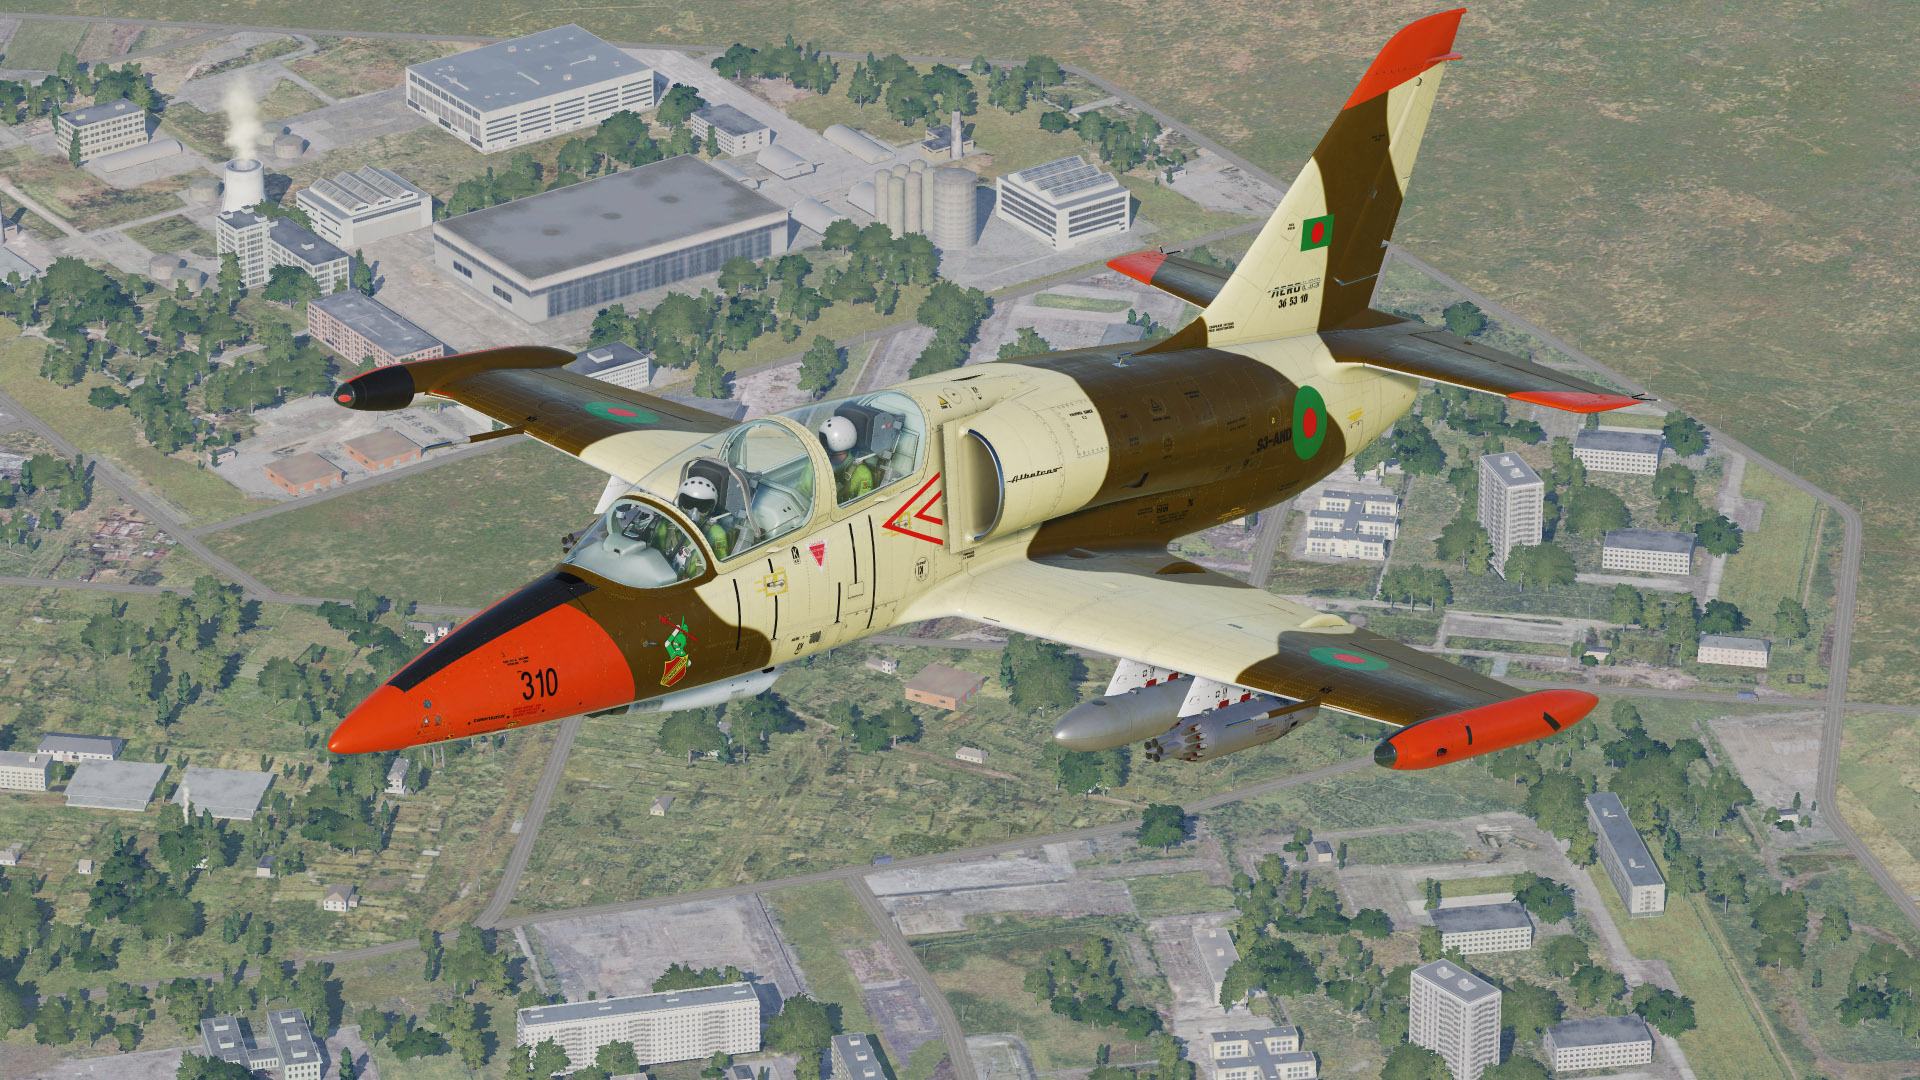 L-39ZA Albatros Bangladesh Air Force